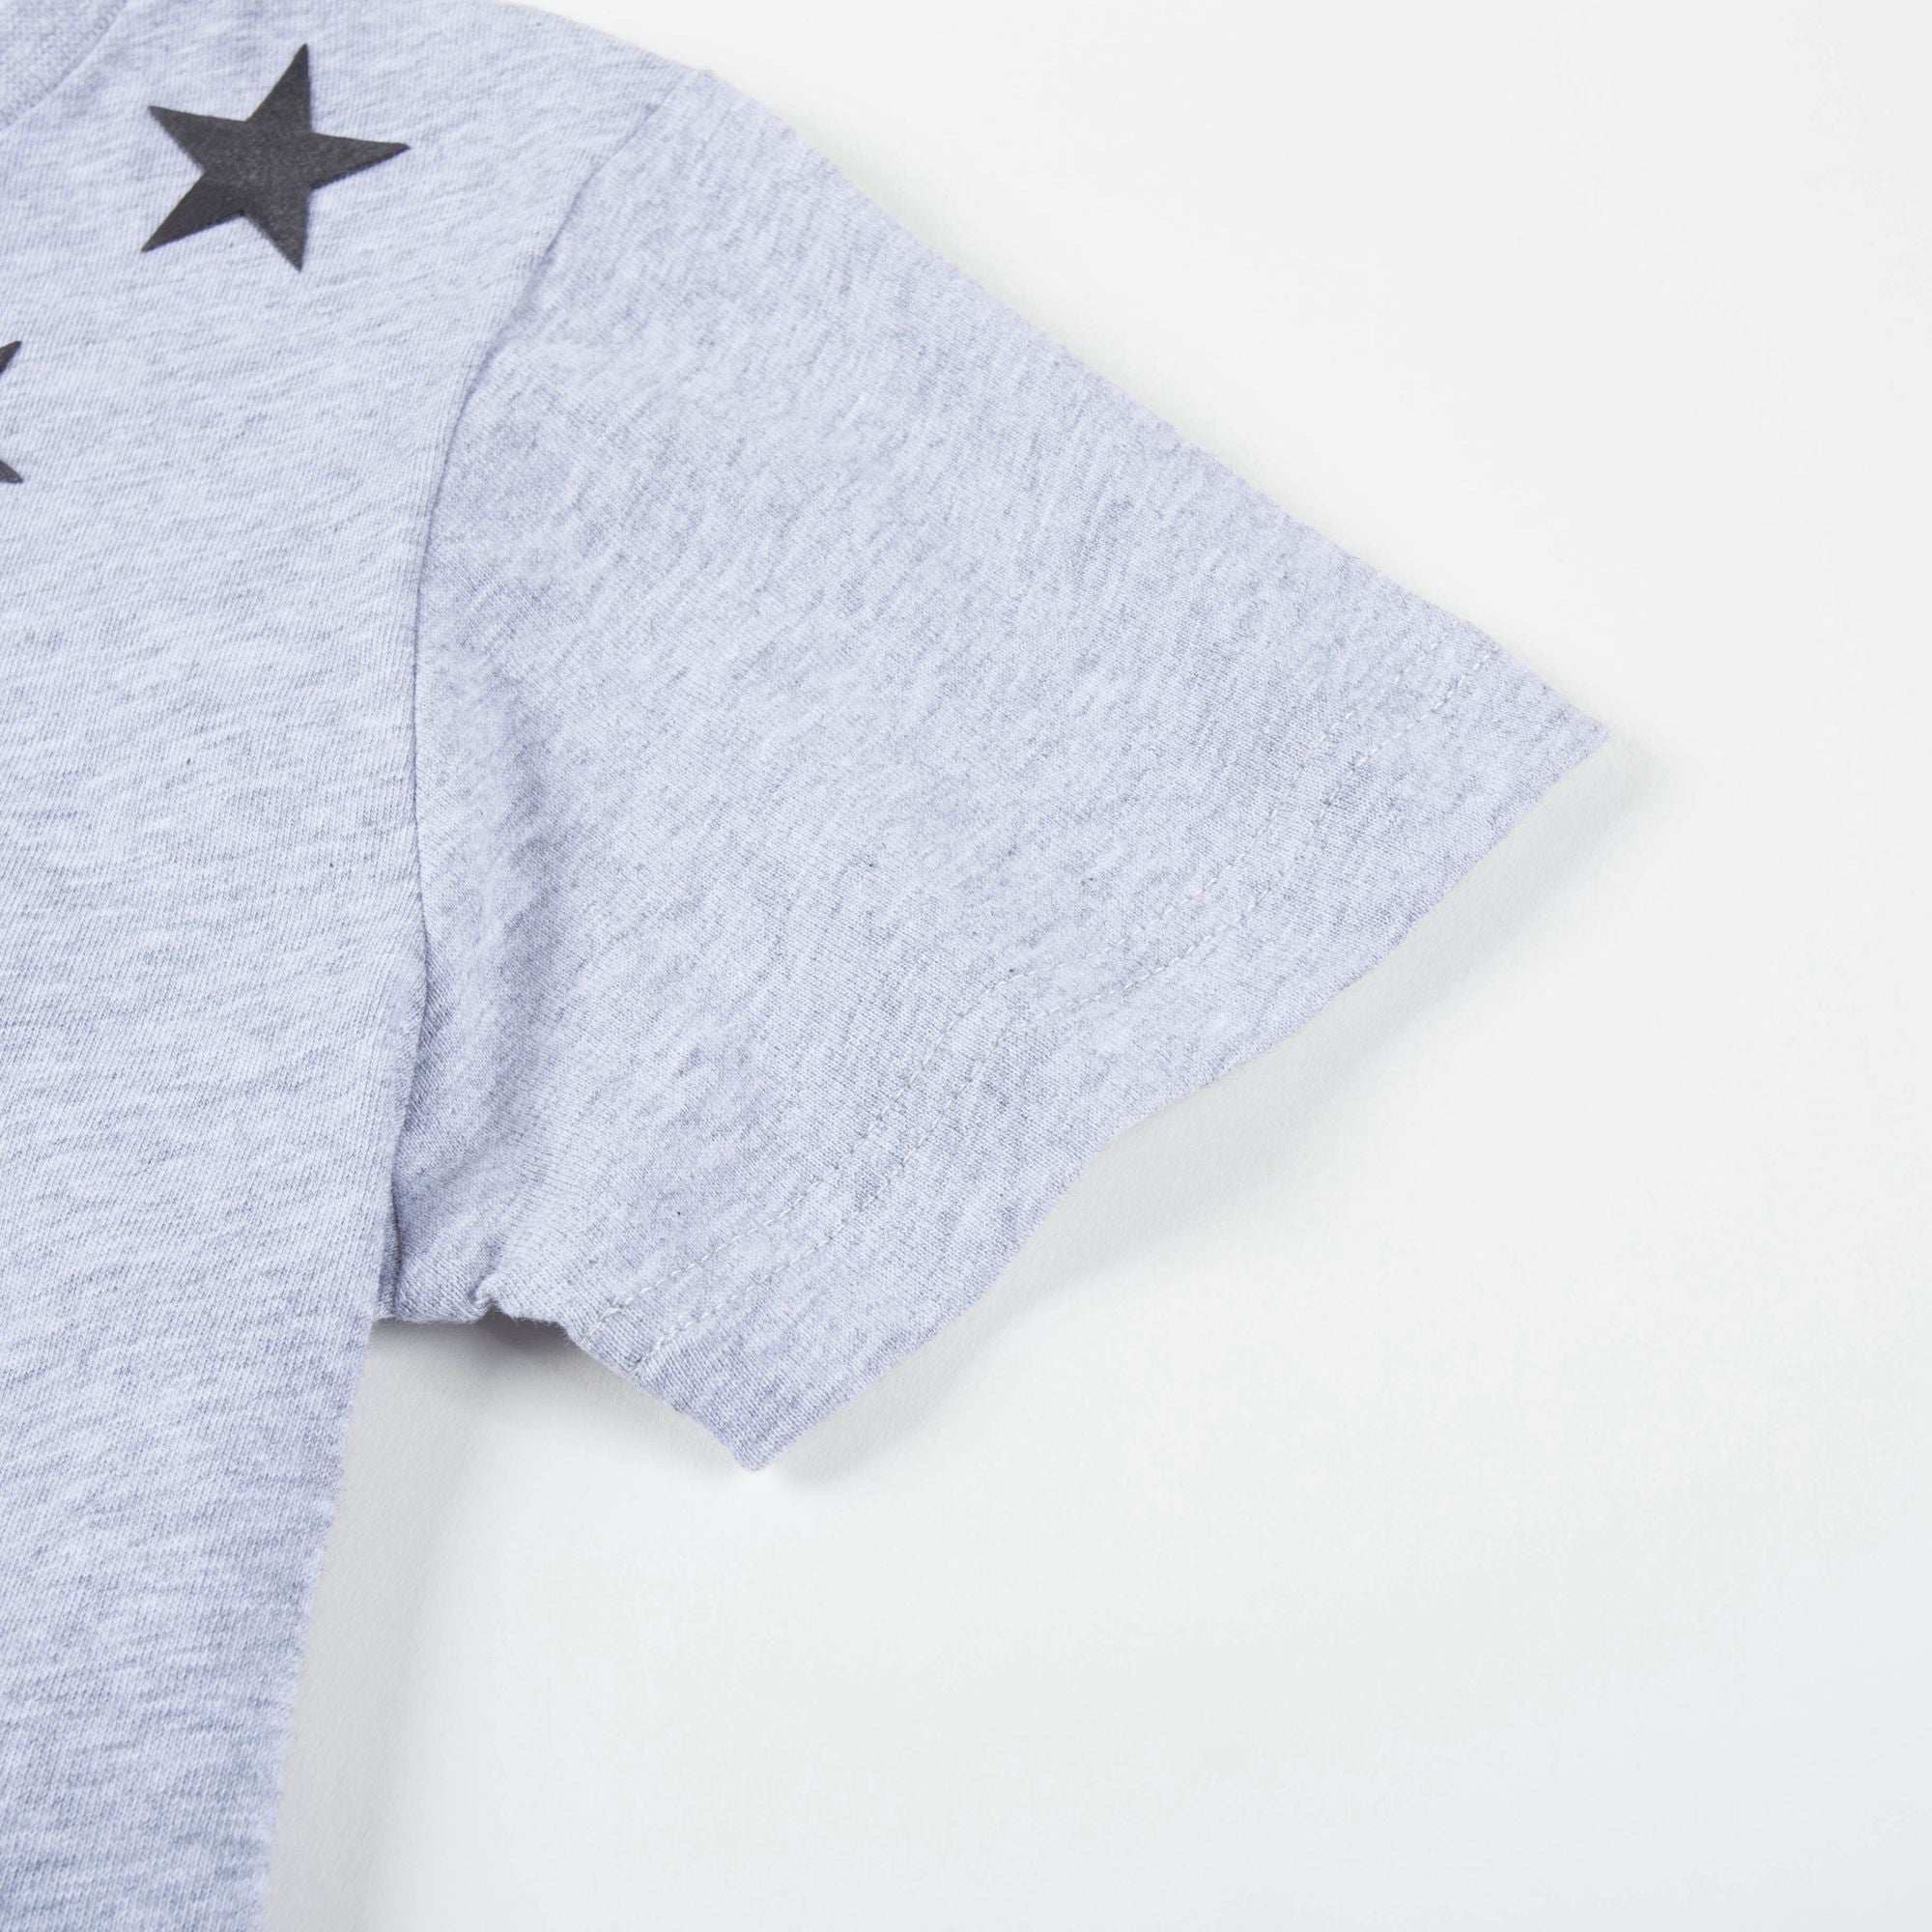 Boys Grey Cotton  "Star"  T-shirt